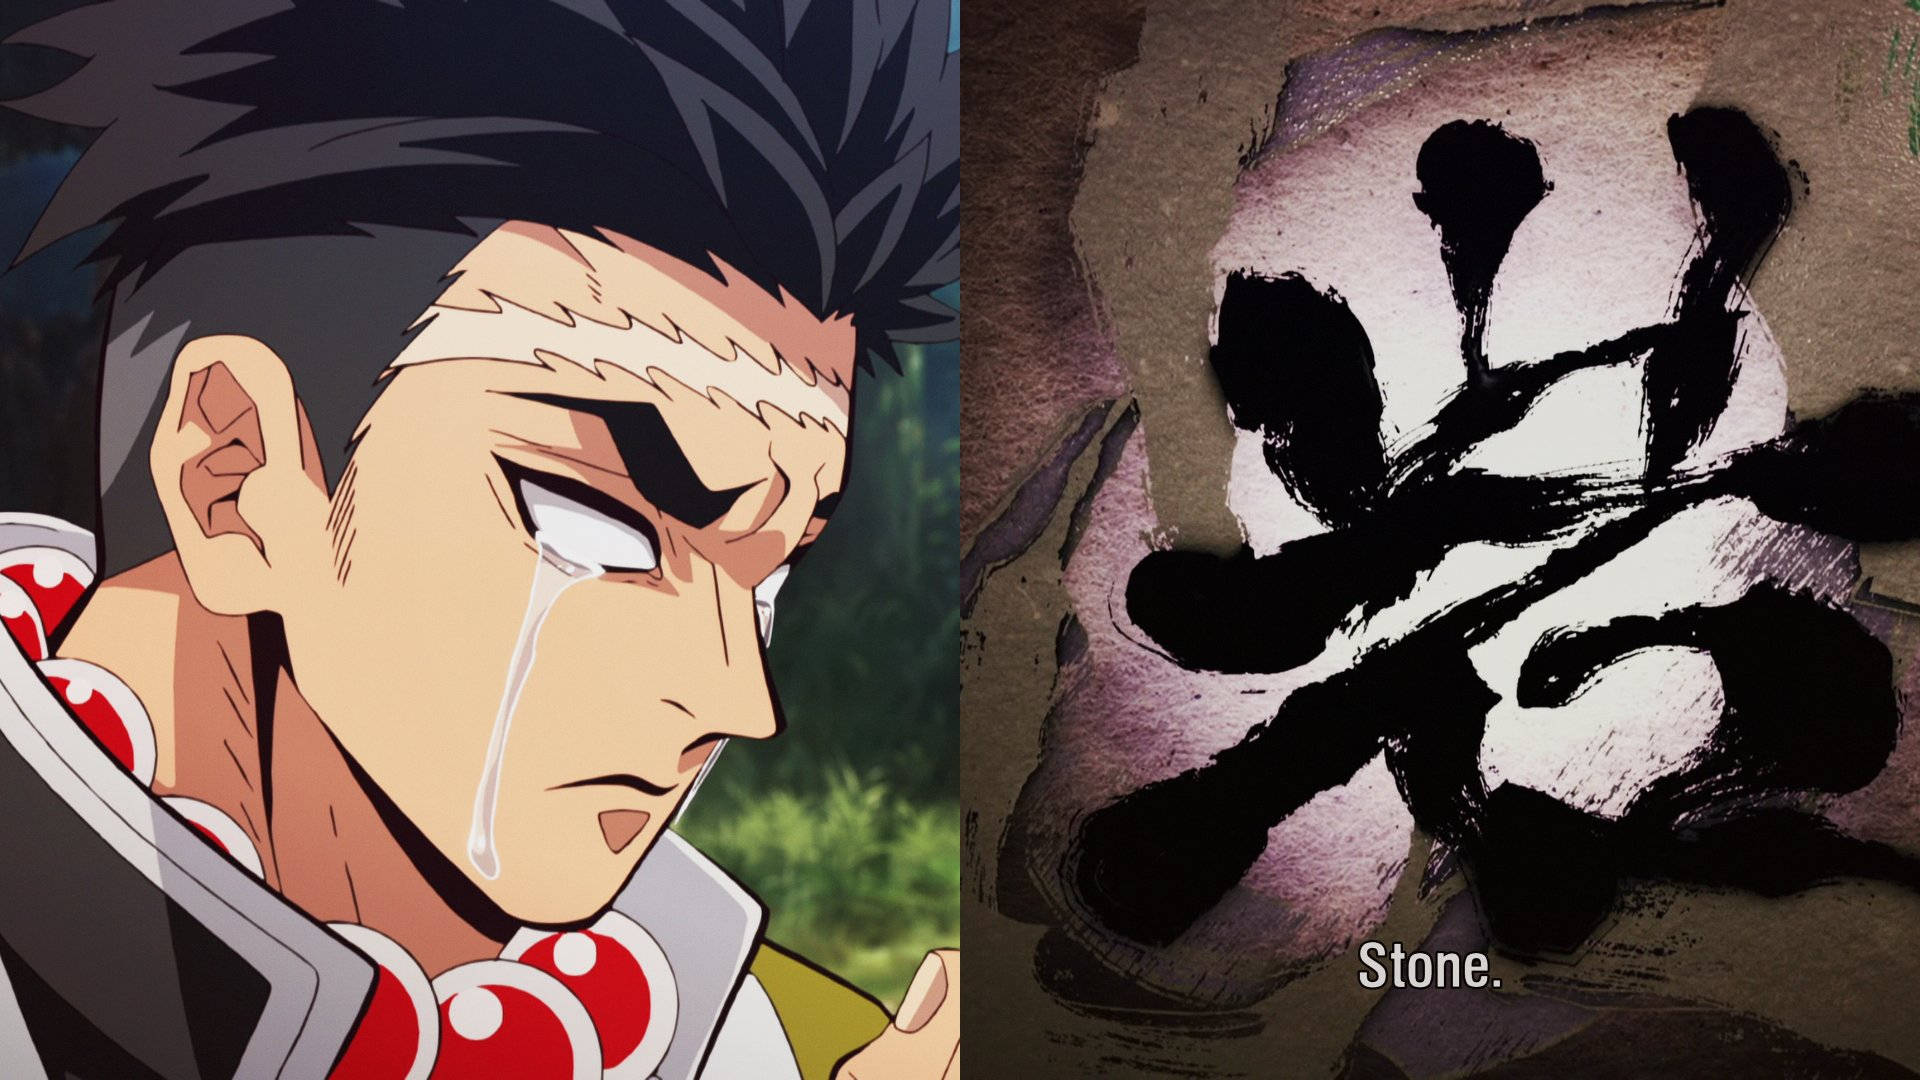 Gyomei Himejima And Stone Sign